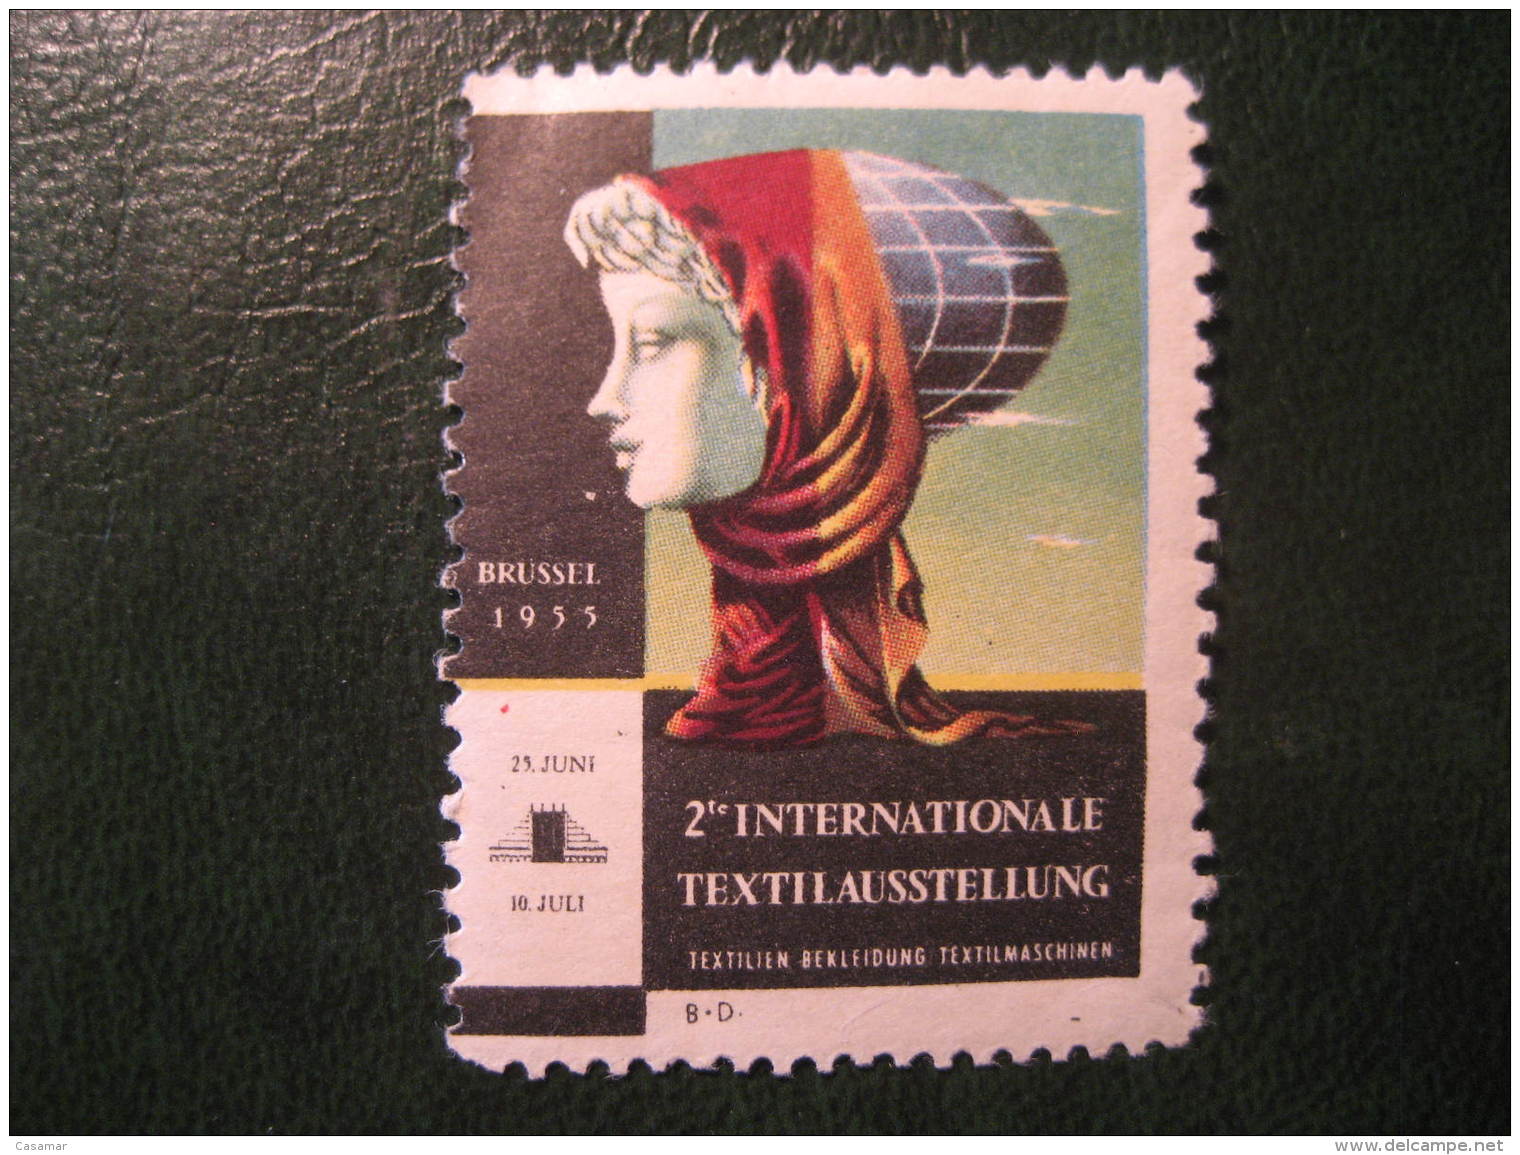 BRUXELLES 1955 II Internationale Textilausstellung Textil Textile Poster Stamp Label Vignette Belgium - Erinnophilie [E]